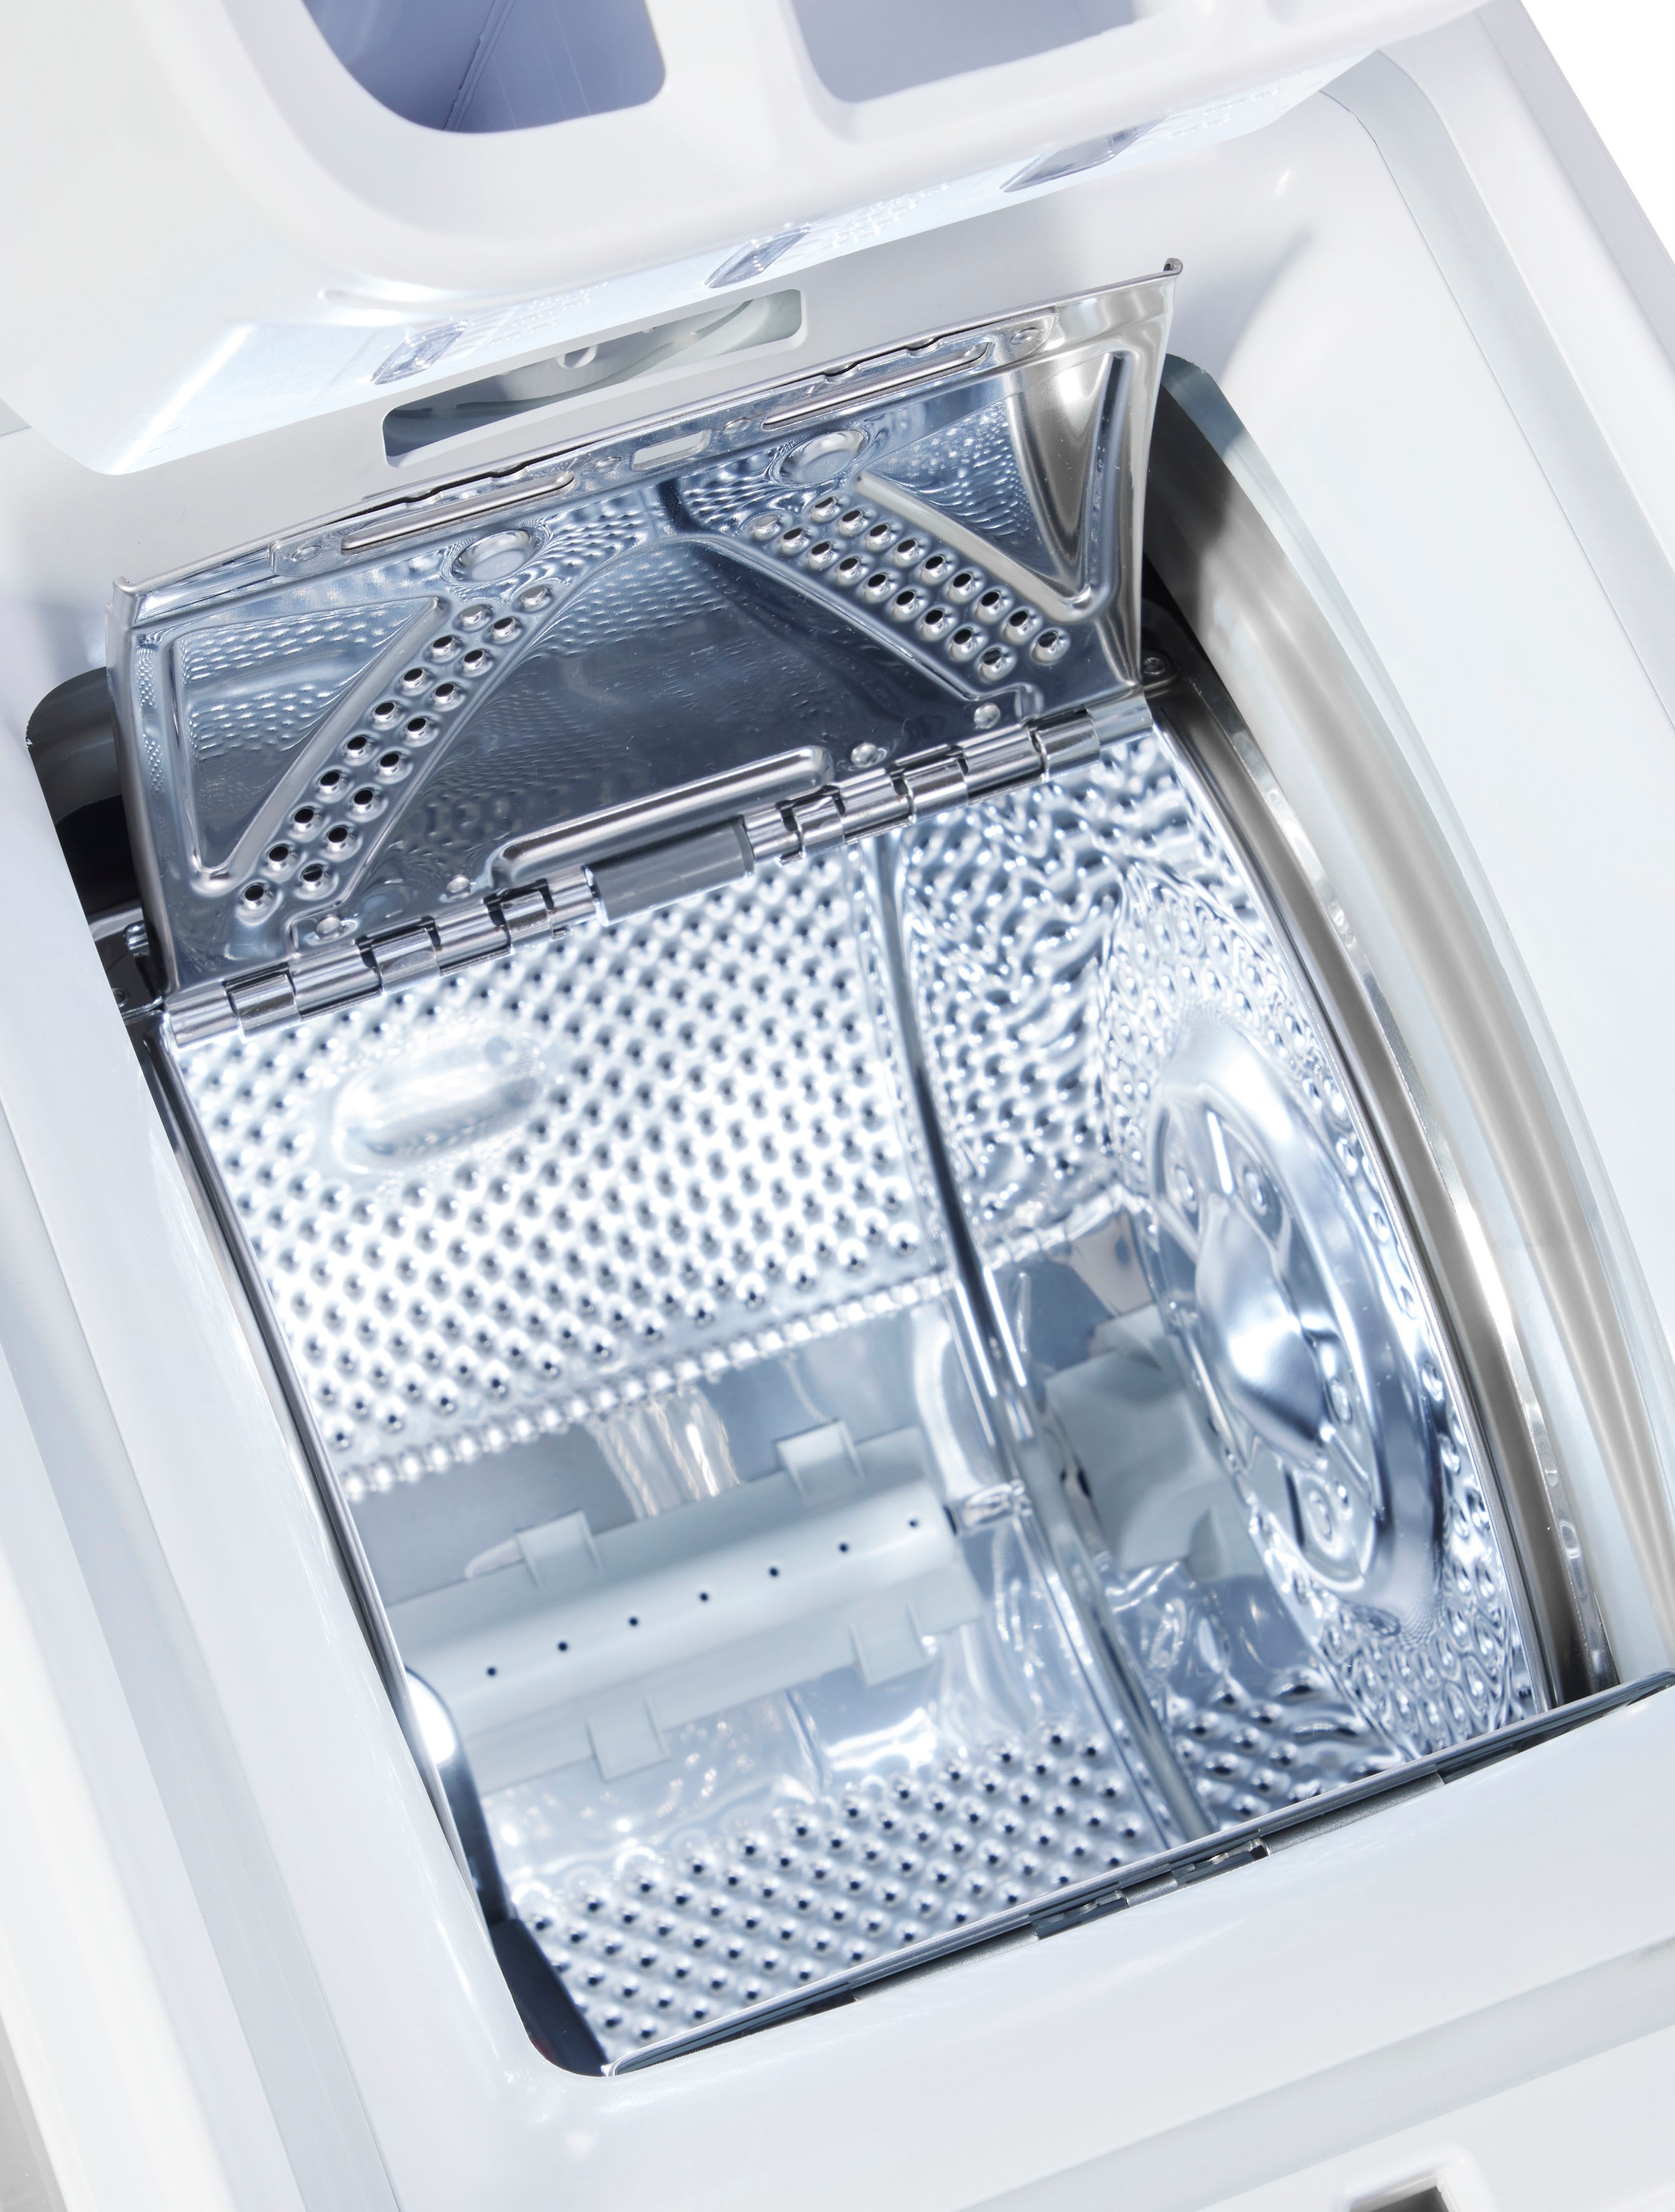 BAUKNECHT Waschmaschine Toplader »WAT Eco 712 B3«, WAT Eco 712 B3, 7 kg, 1200 U/min